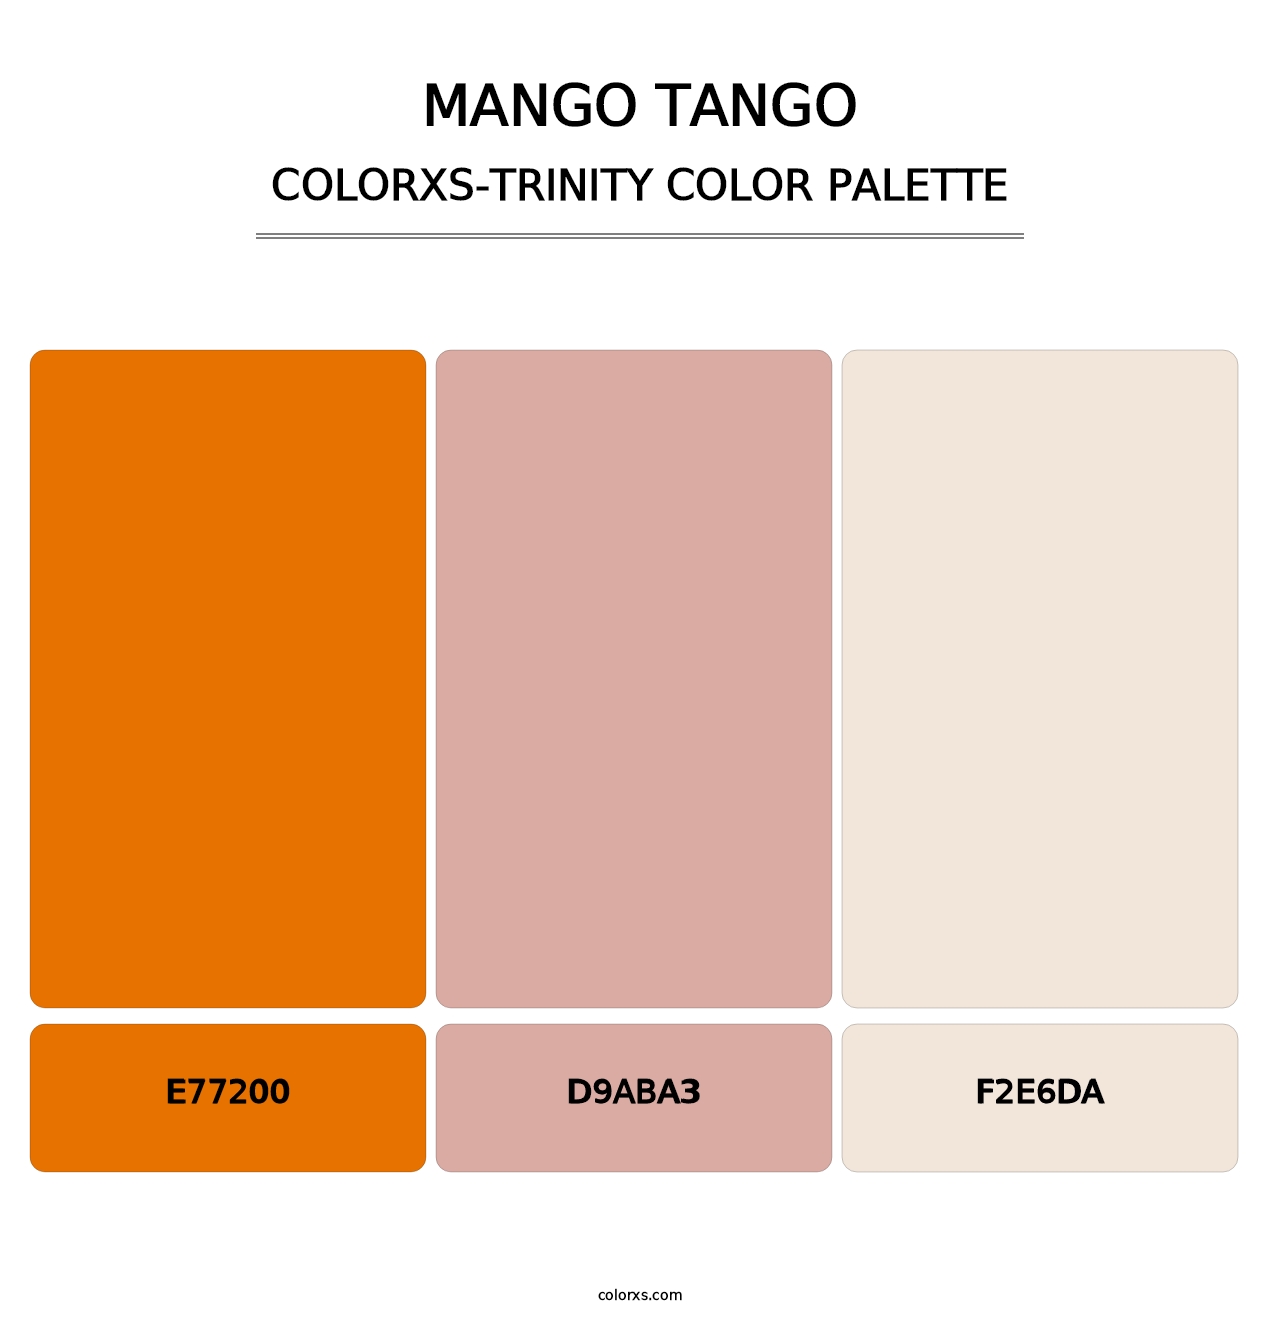 Mango Tango - Colorxs Trinity Palette